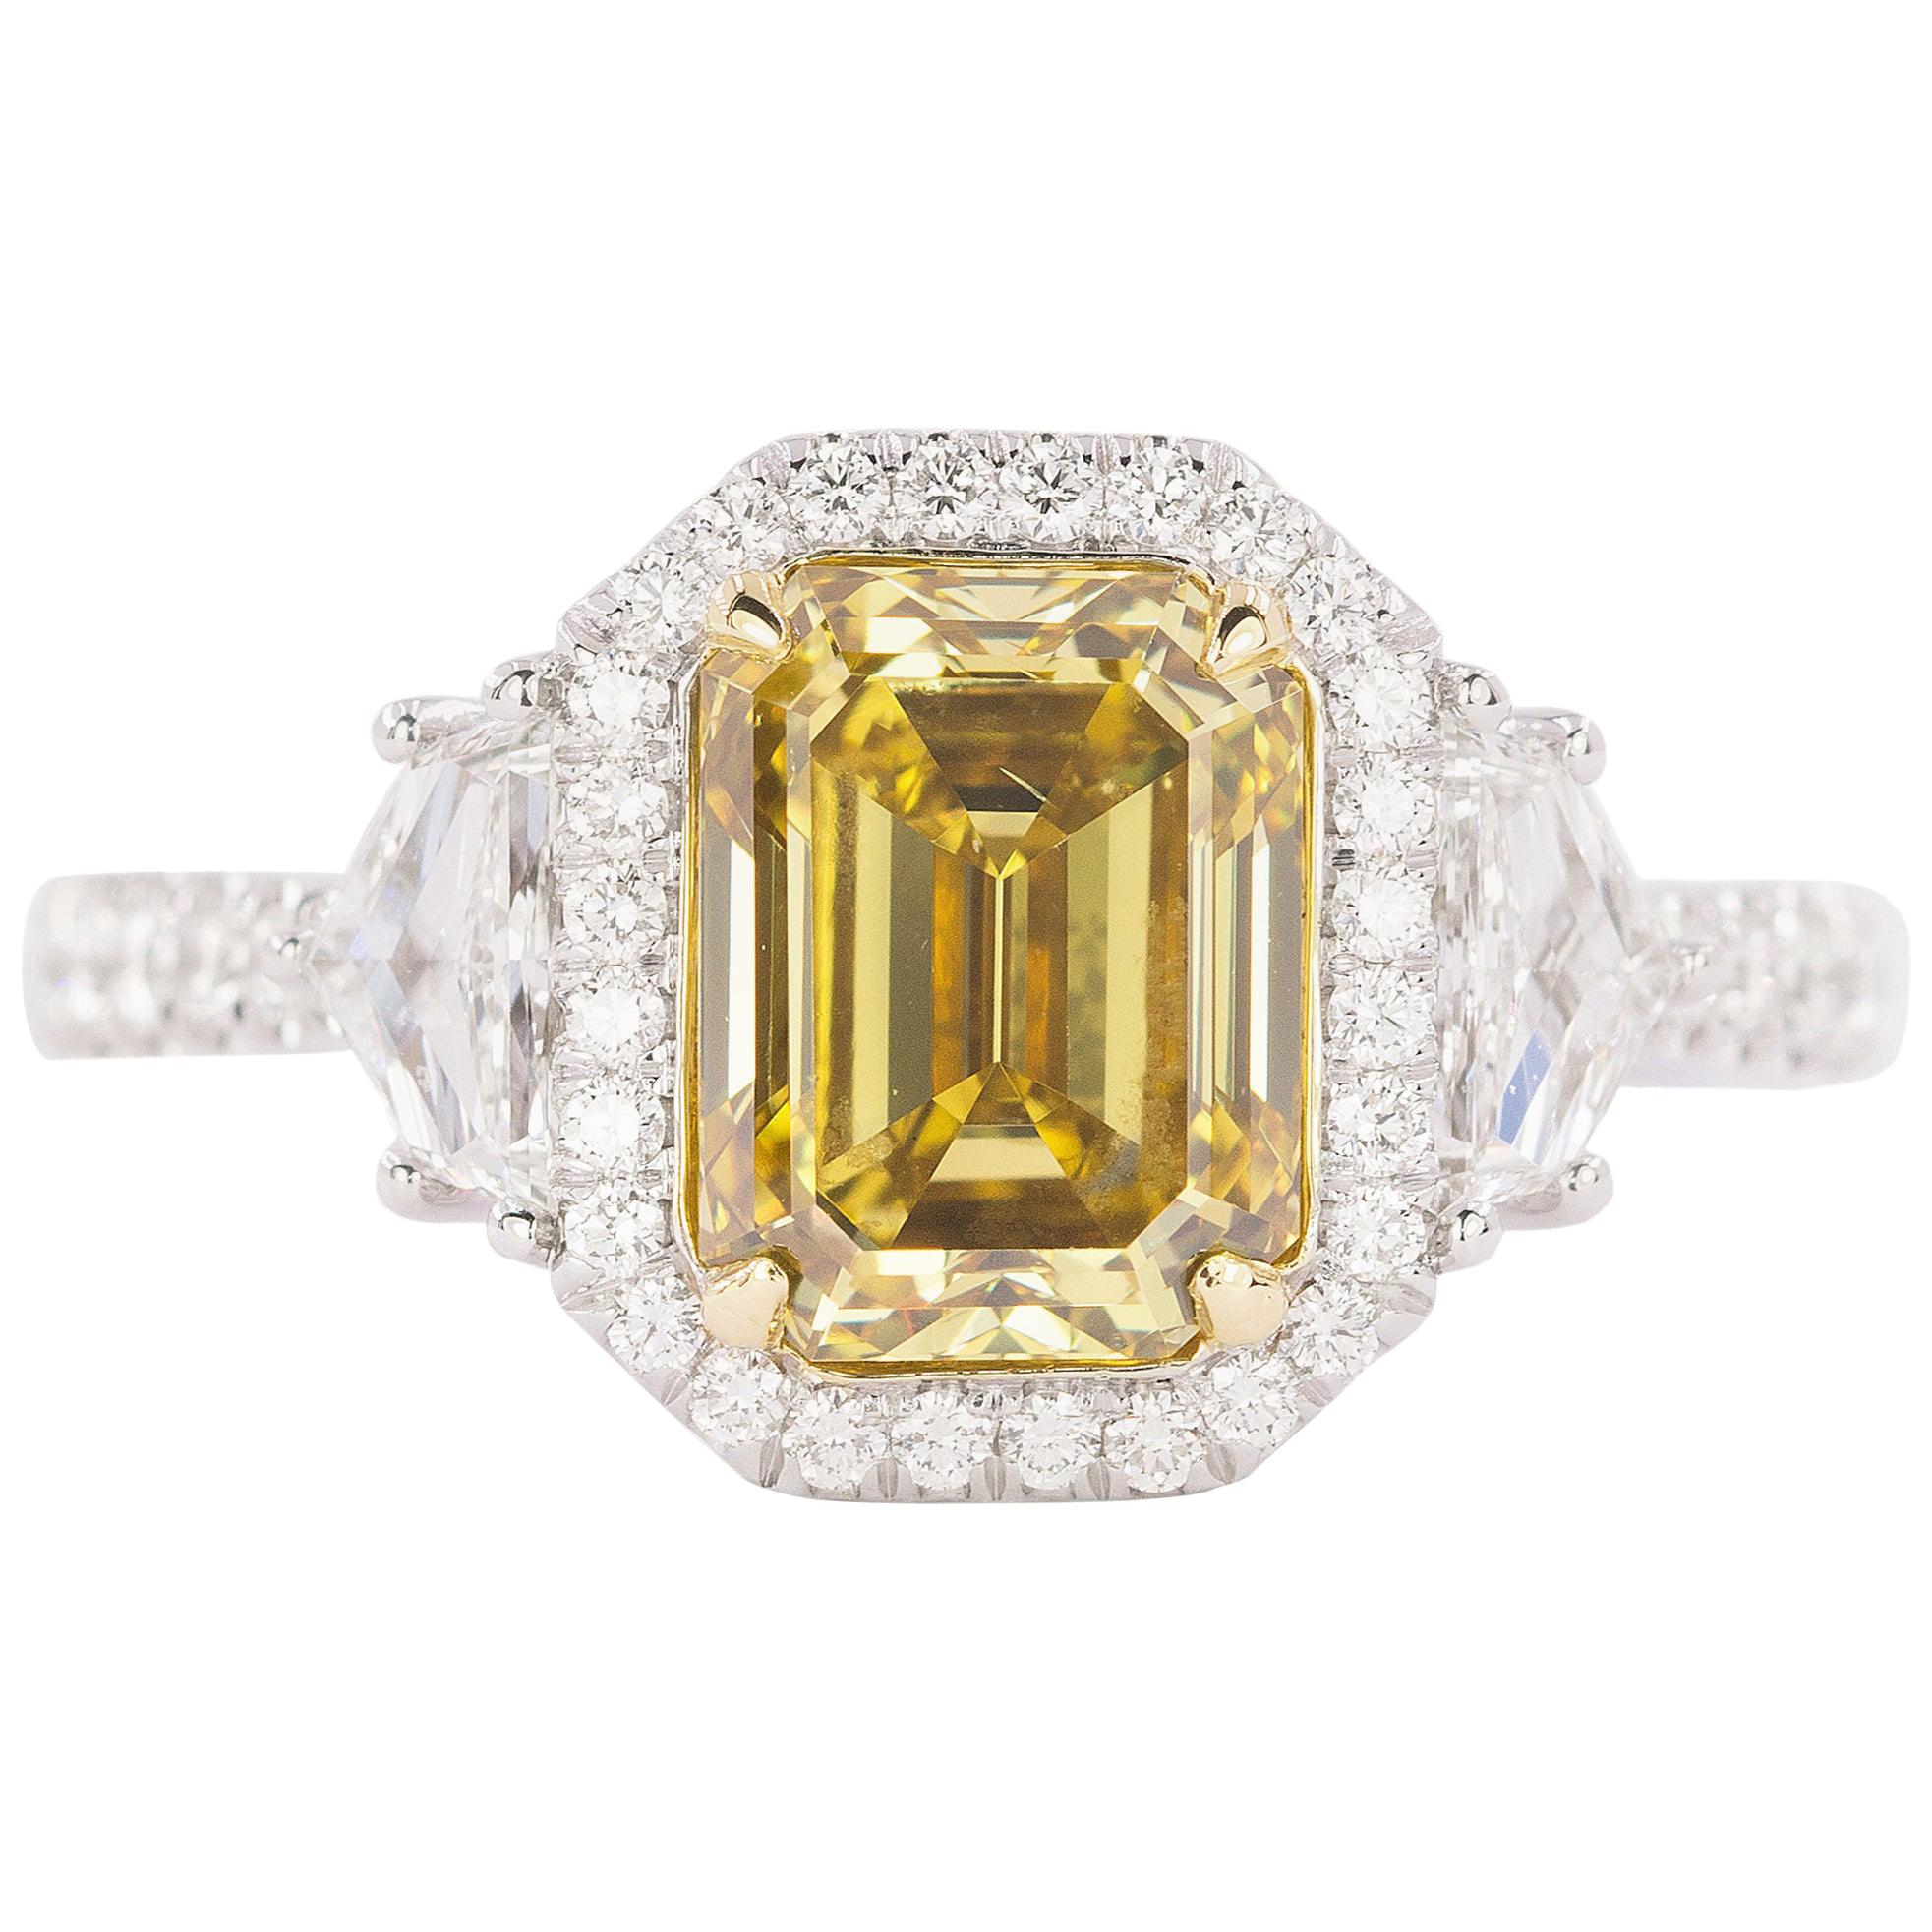 18 Karat 2.26 Carat Fancy Deep Yellow Diamond Ring